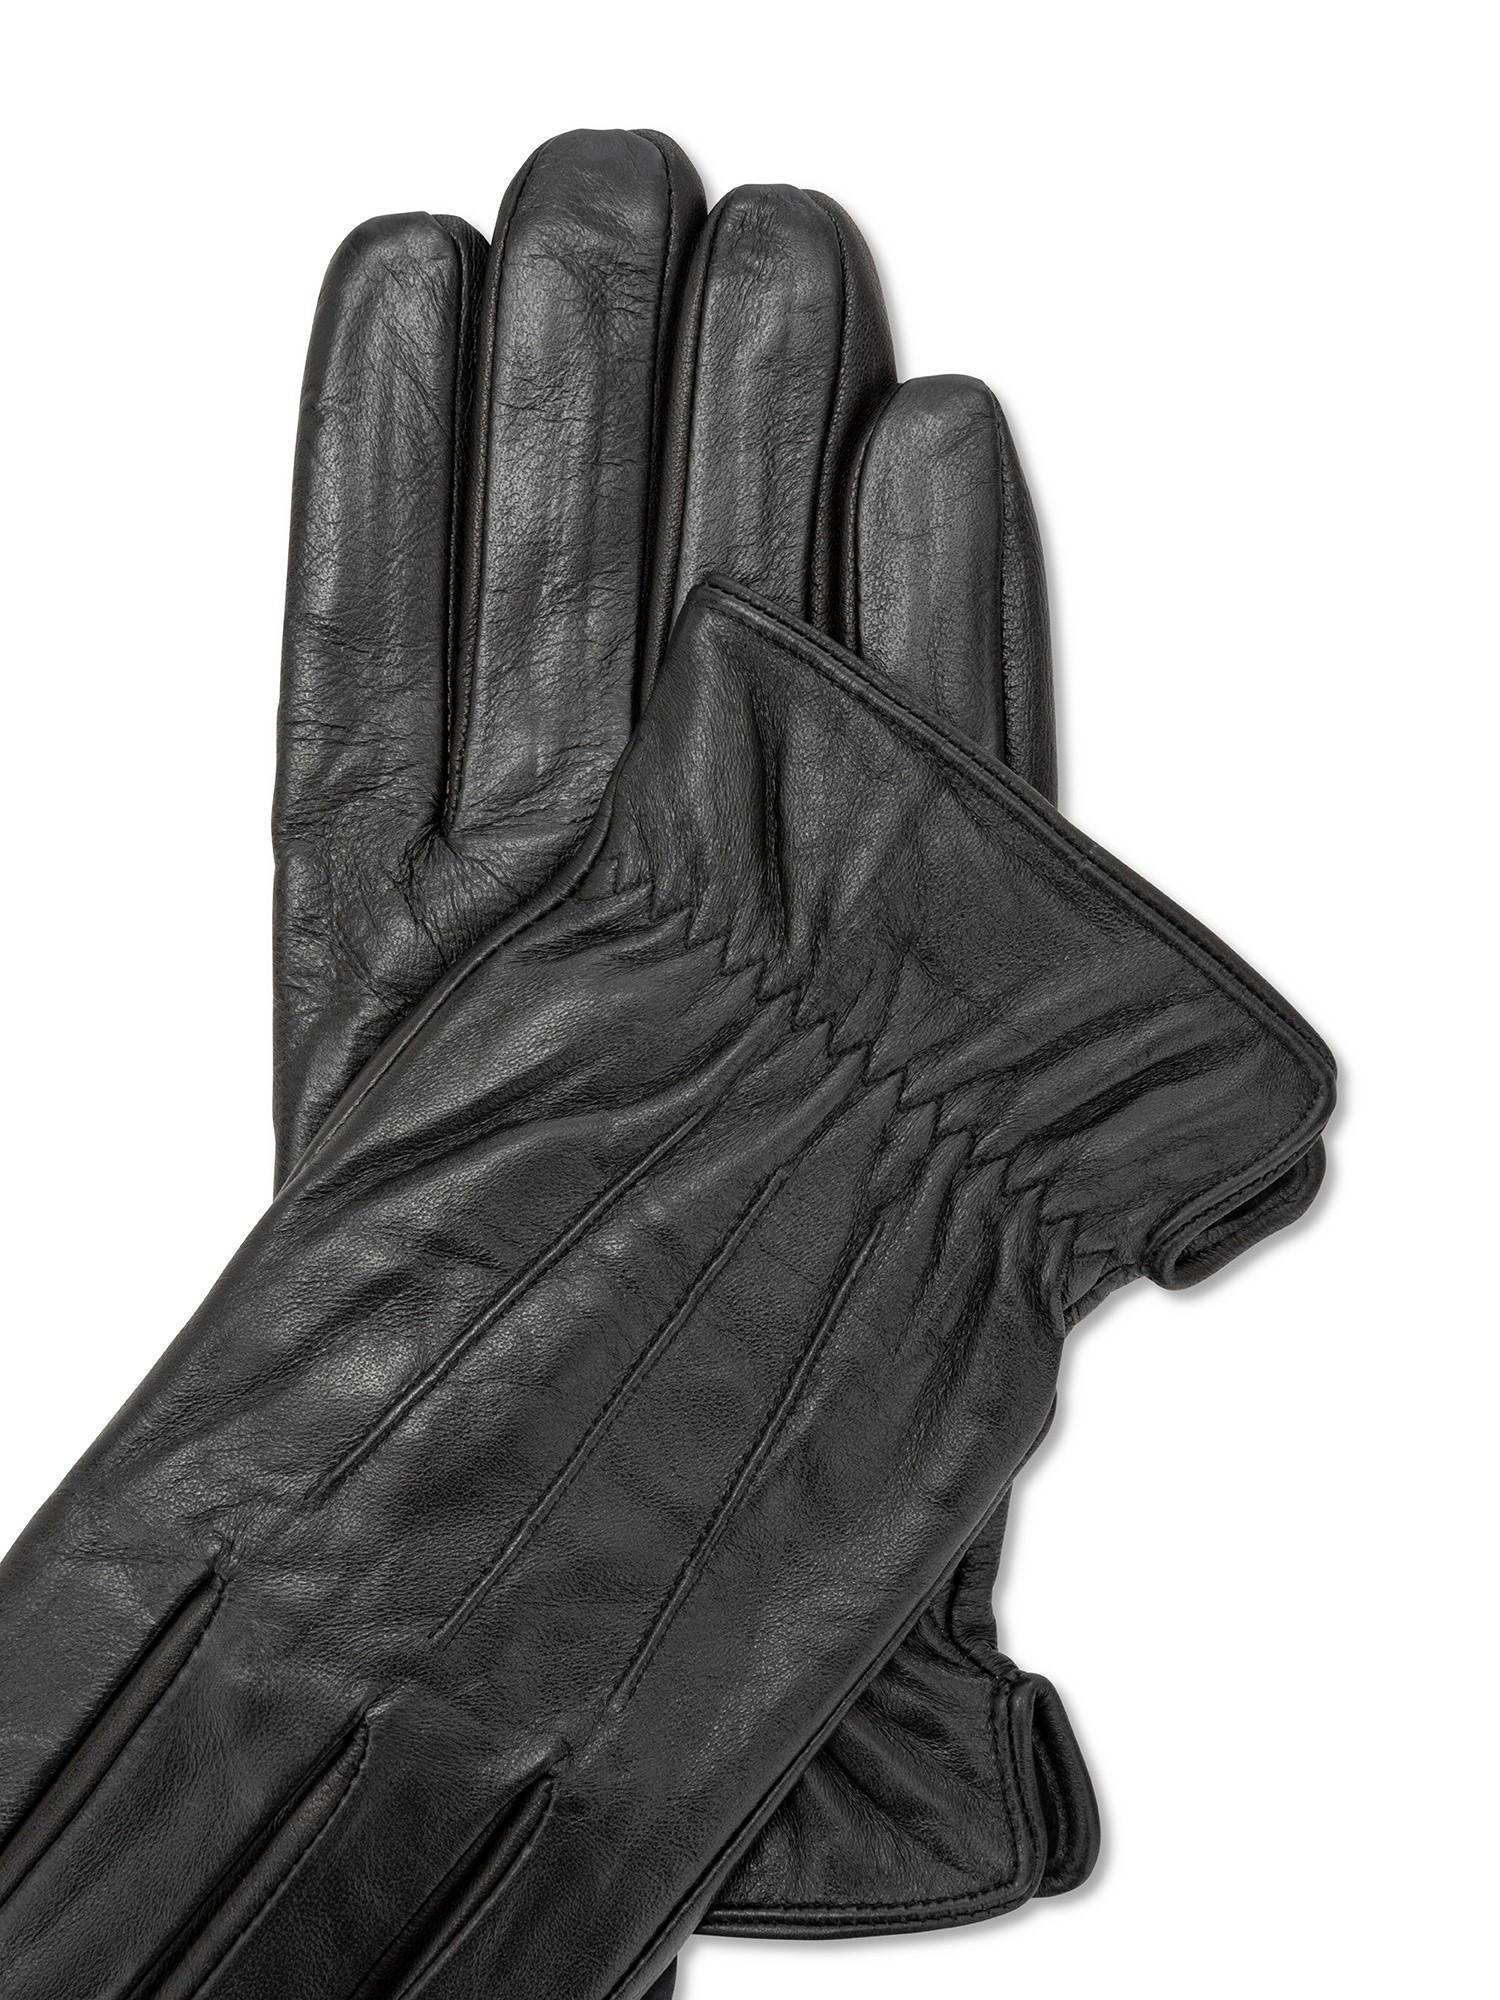 Luca D'Altieri - Genuine leather gloves, Black, large image number 1